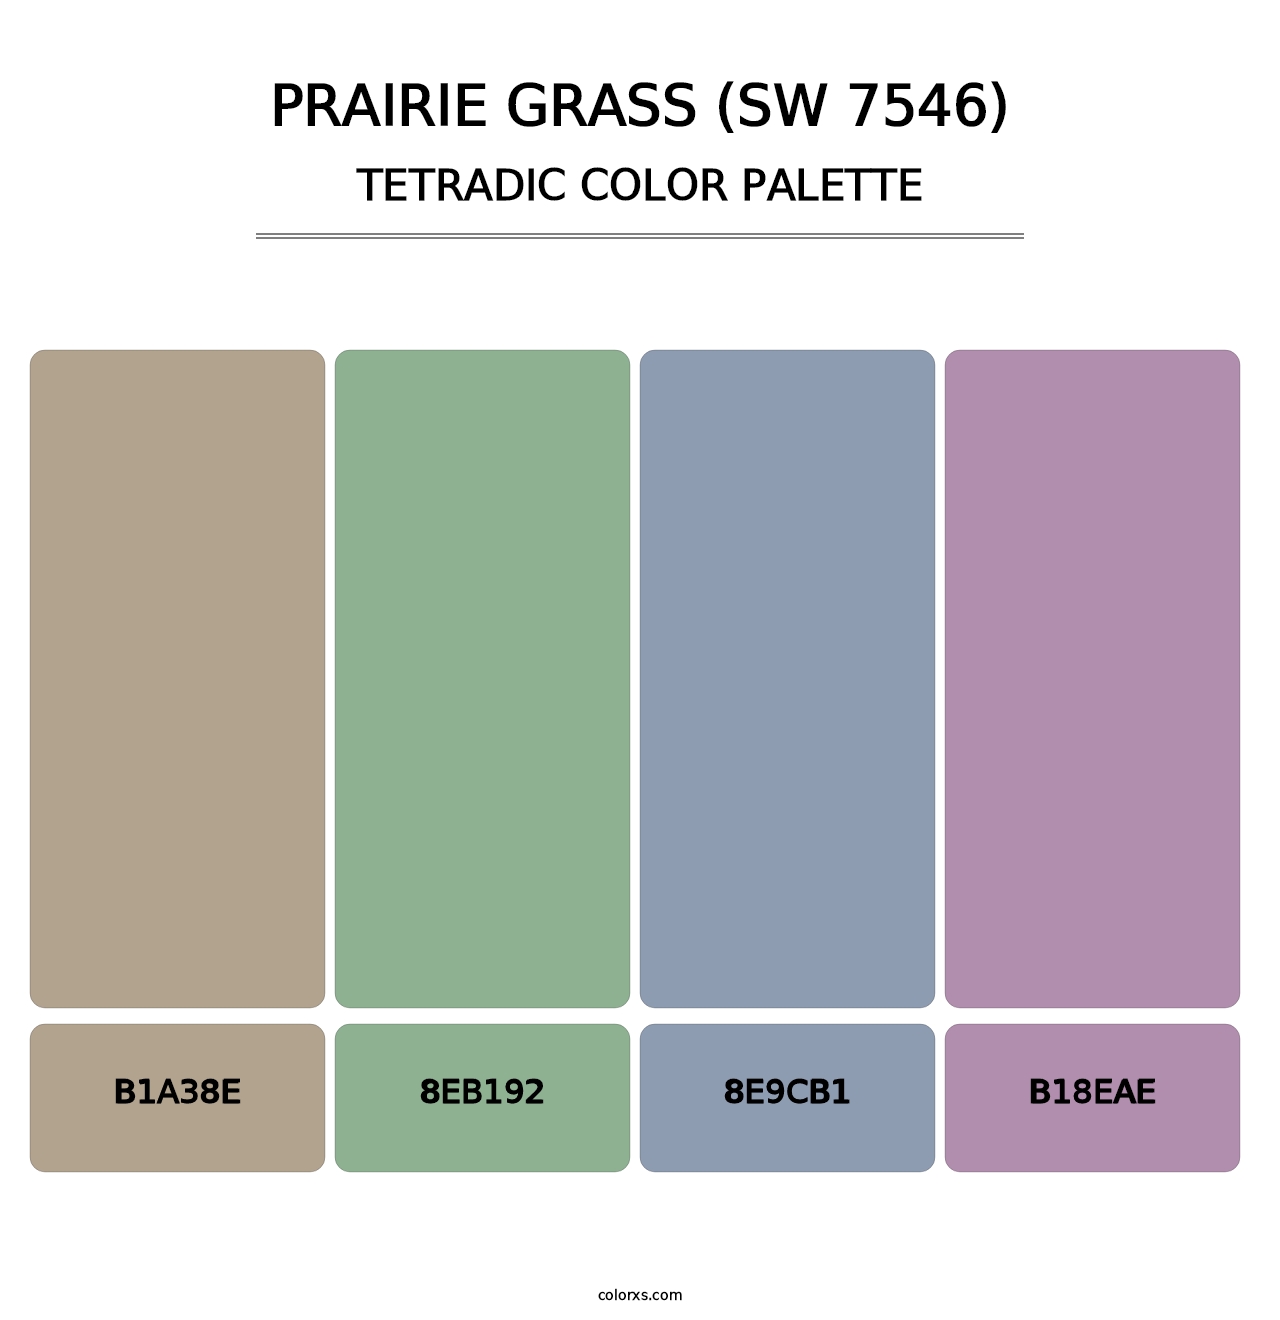 Prairie Grass (SW 7546) - Tetradic Color Palette